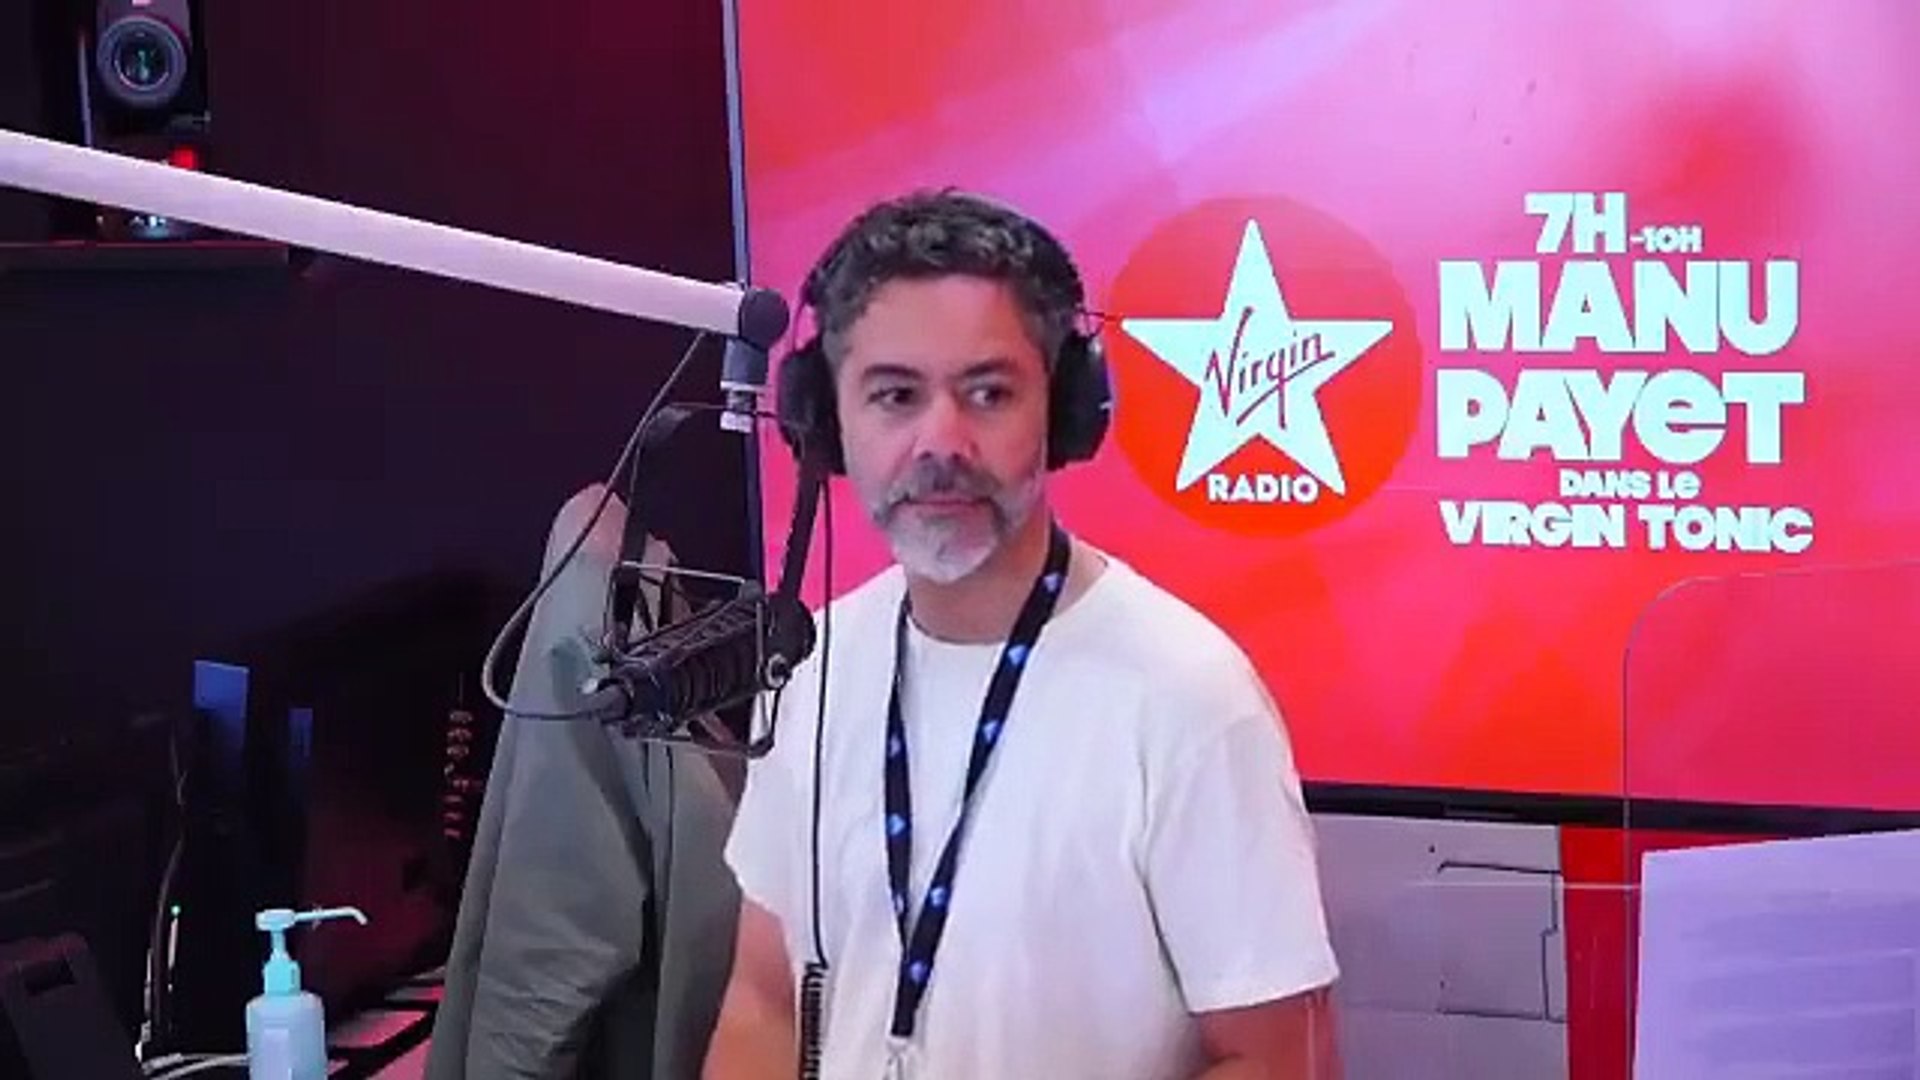 Manu Payet dans "Virgin Tonic" - Vidéo Dailymotion